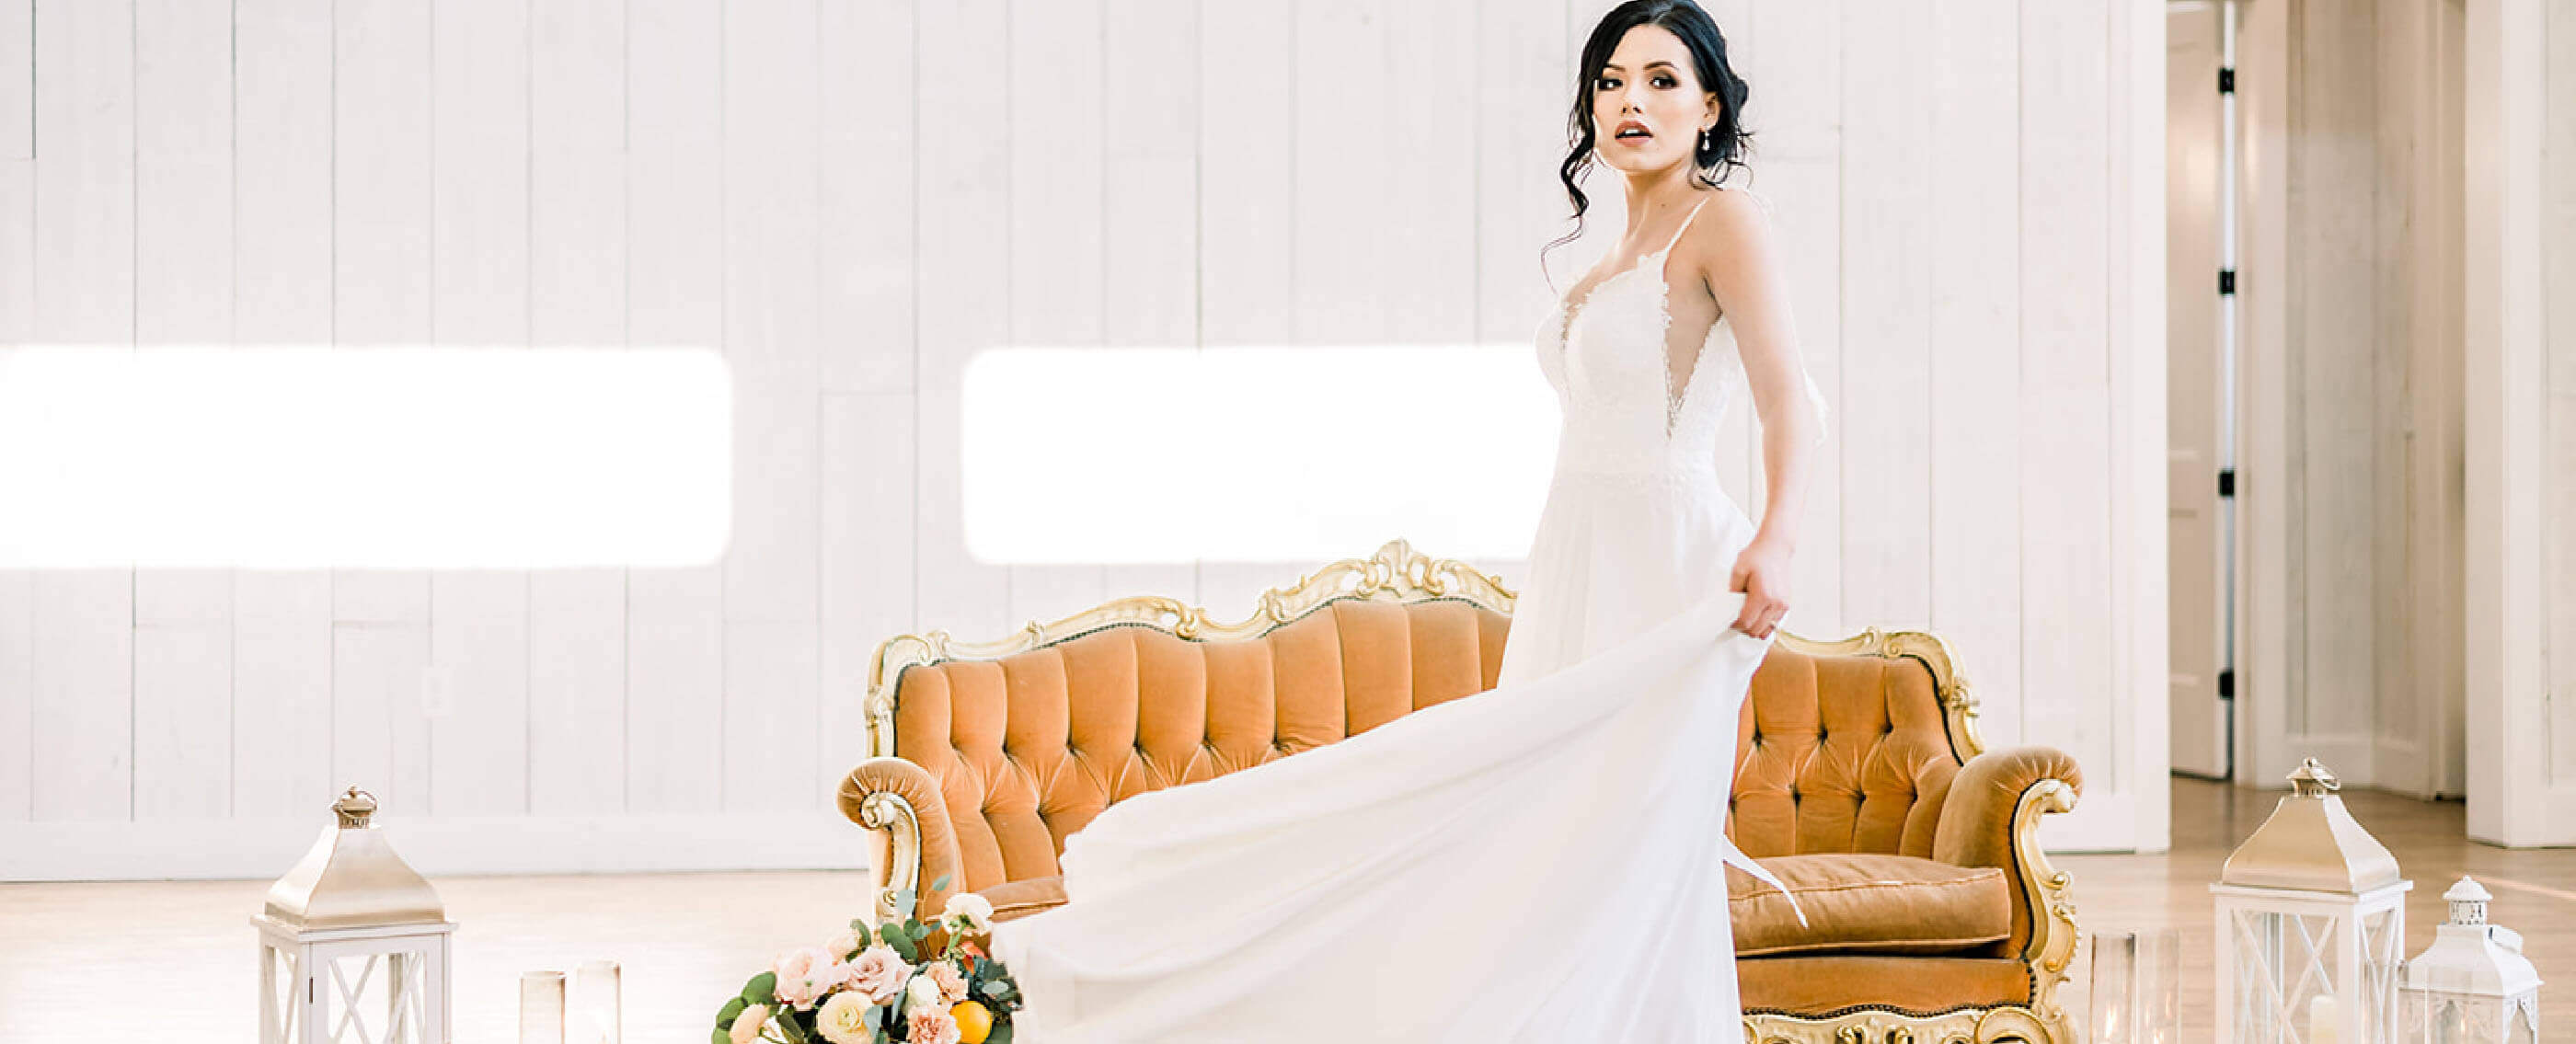 Bride choosing wedding dress at Something Blue Texas. Desktop Image